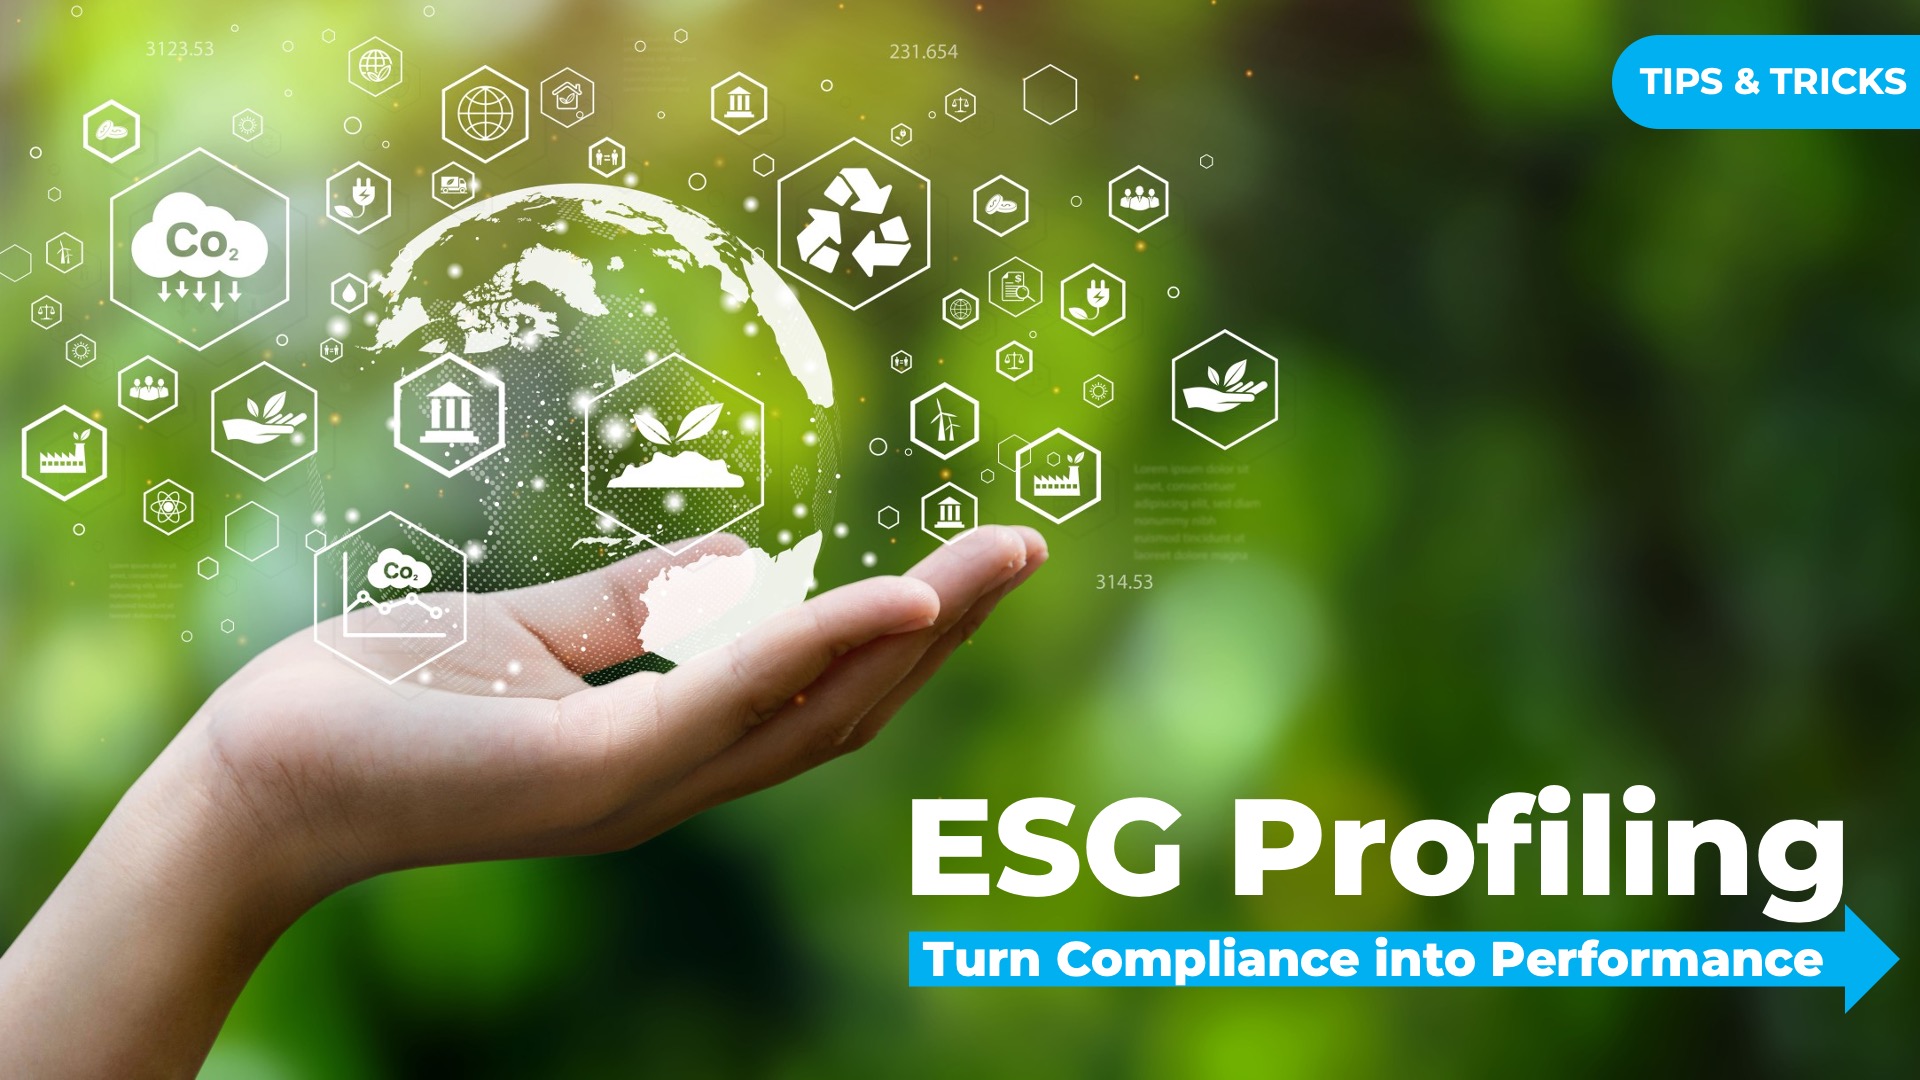 ESG Profiling Tips & Tricks